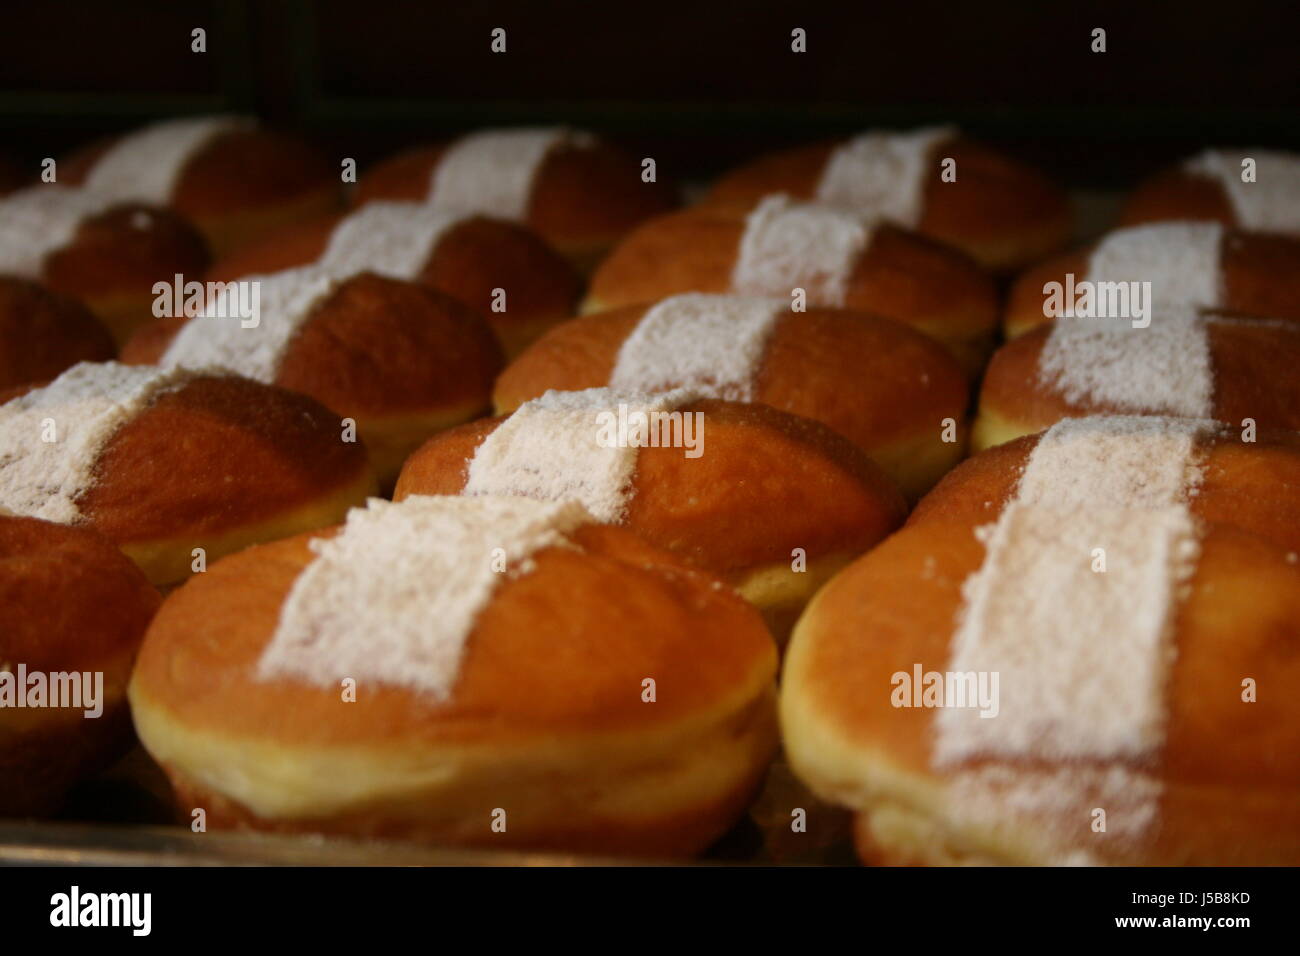 sugar sheet metal pastries cruller austrian staubzucker ssses bestuben Stock Photo